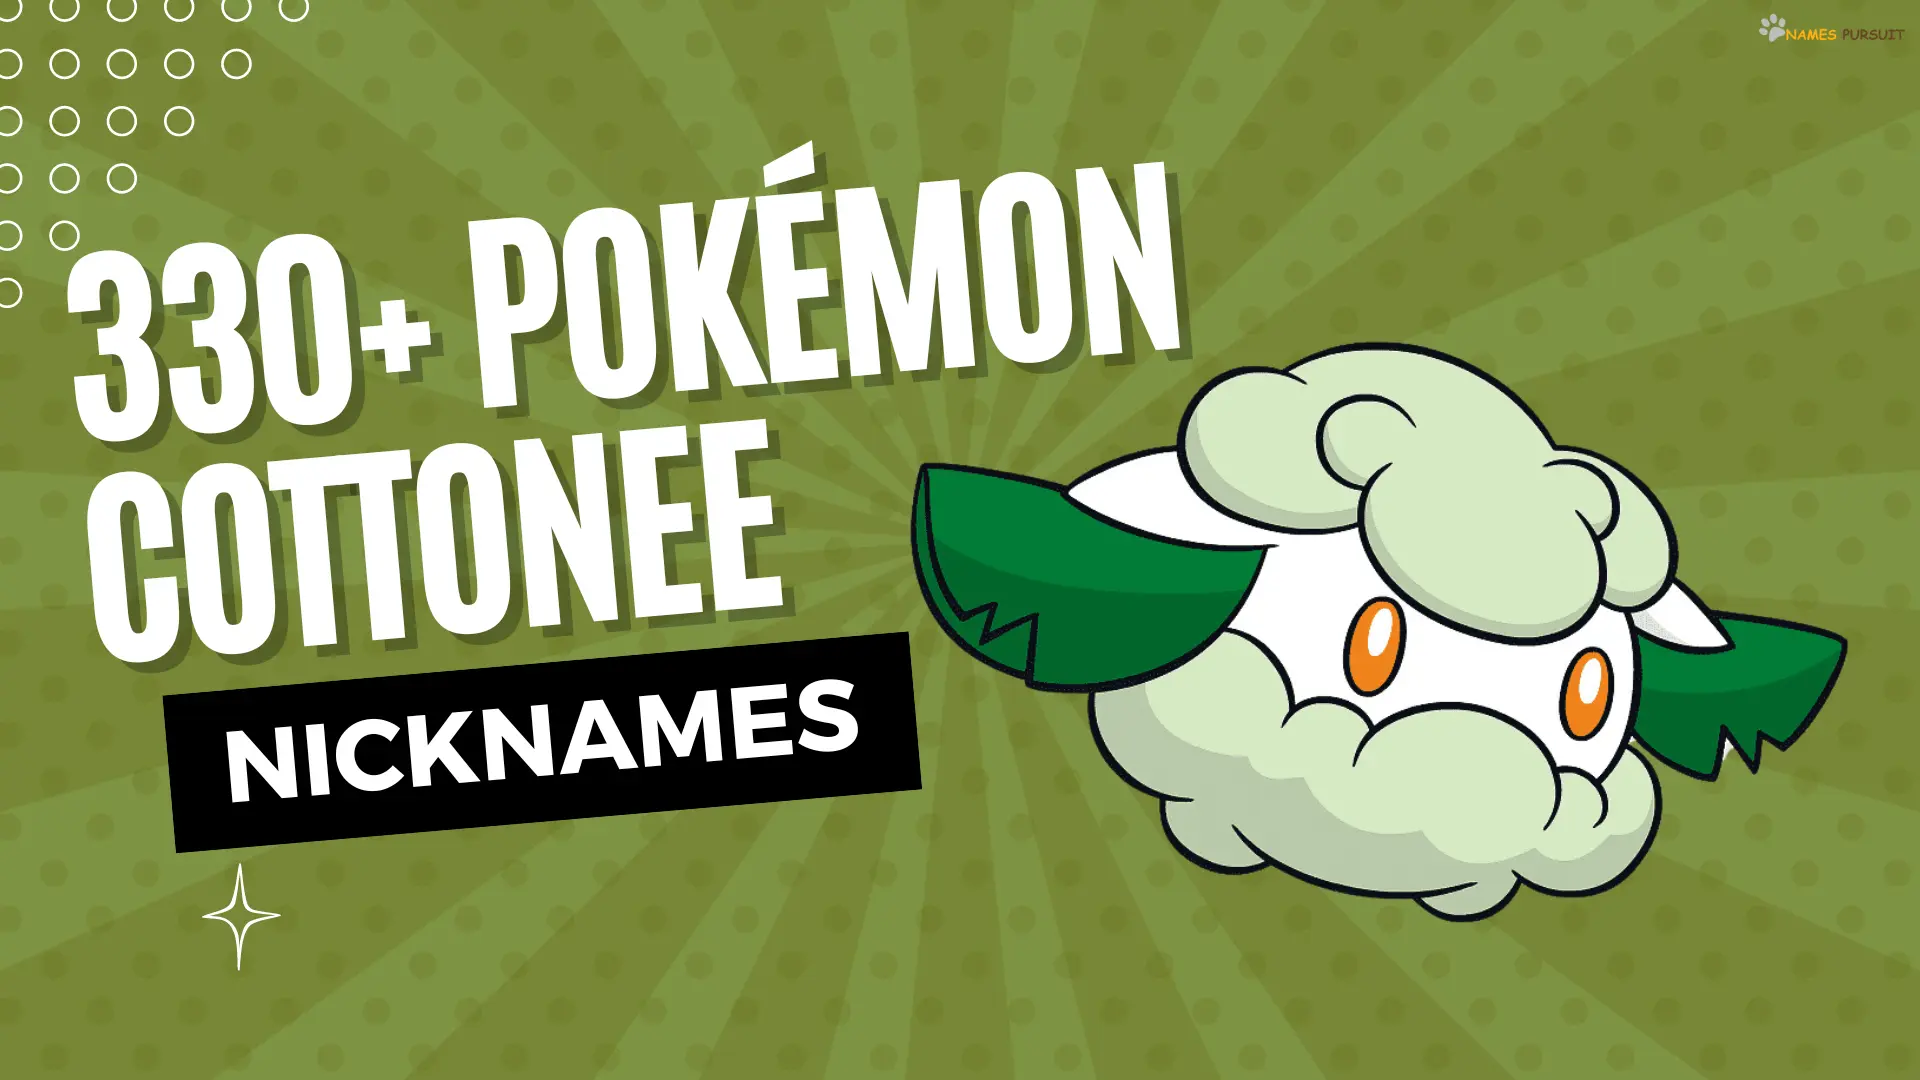 Pokémon Cottonee Nicknames